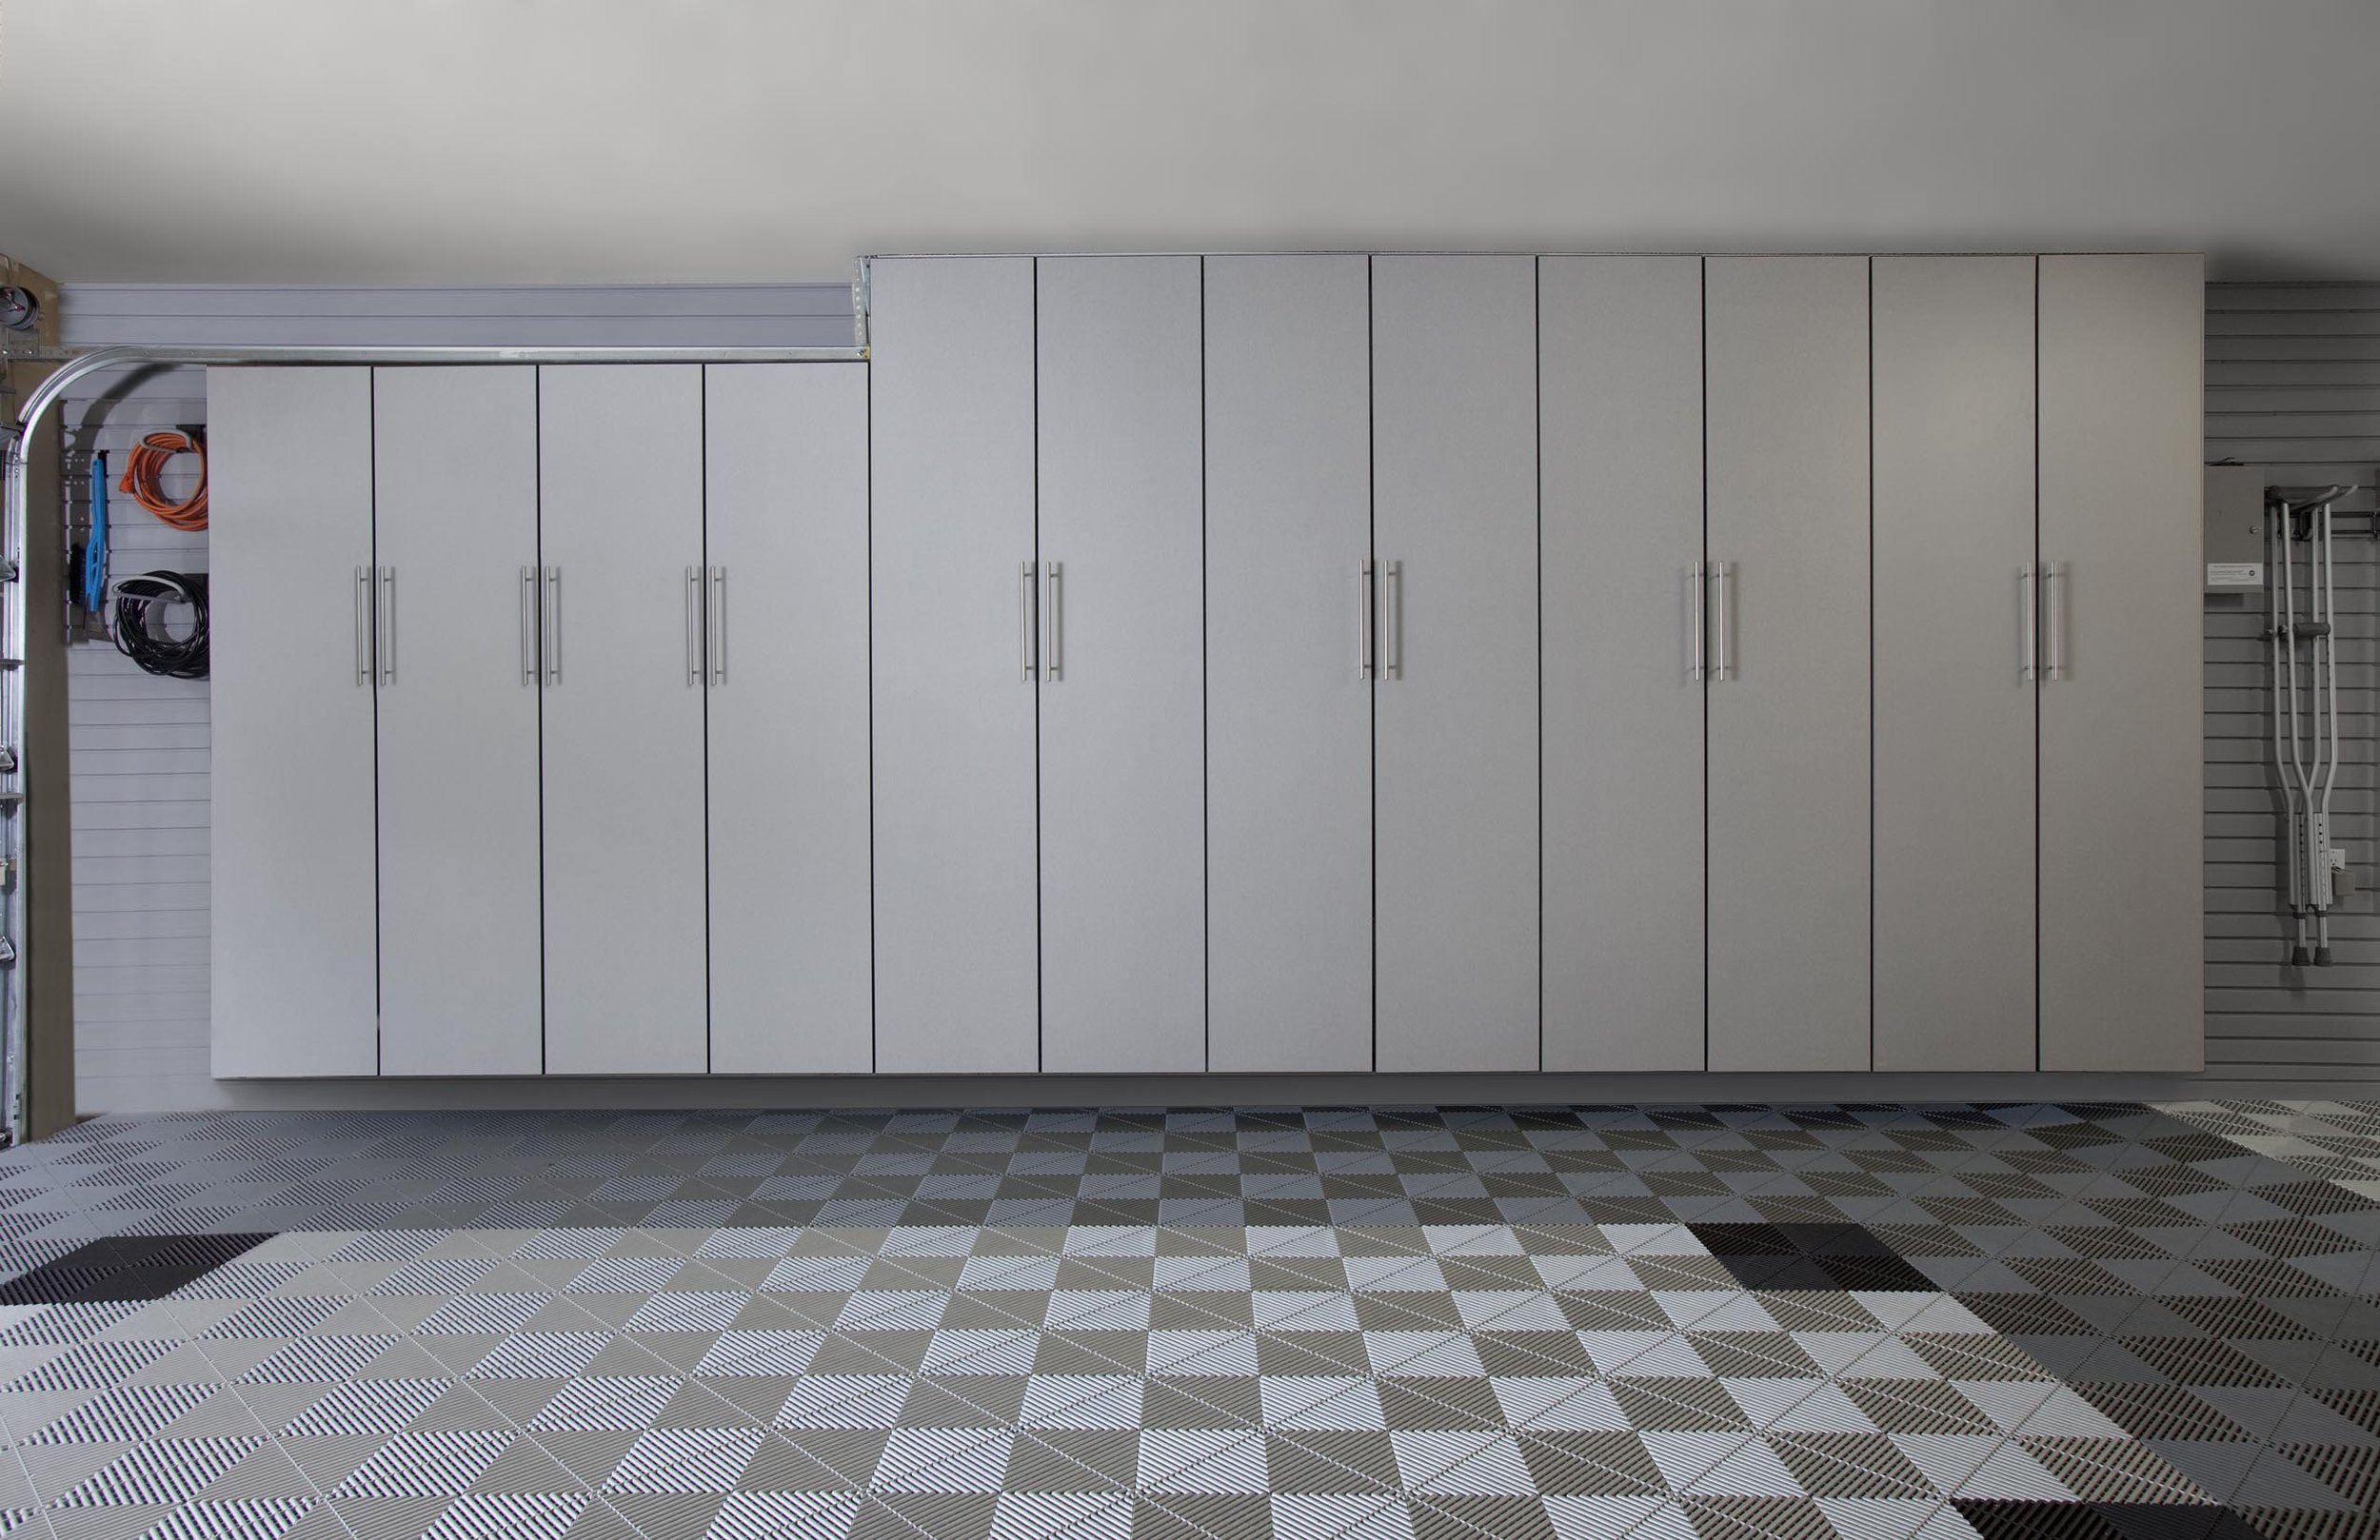   Modular Flooring Solutions   Custom. Non-Slip. Made to Last.   Free 3-D Design  